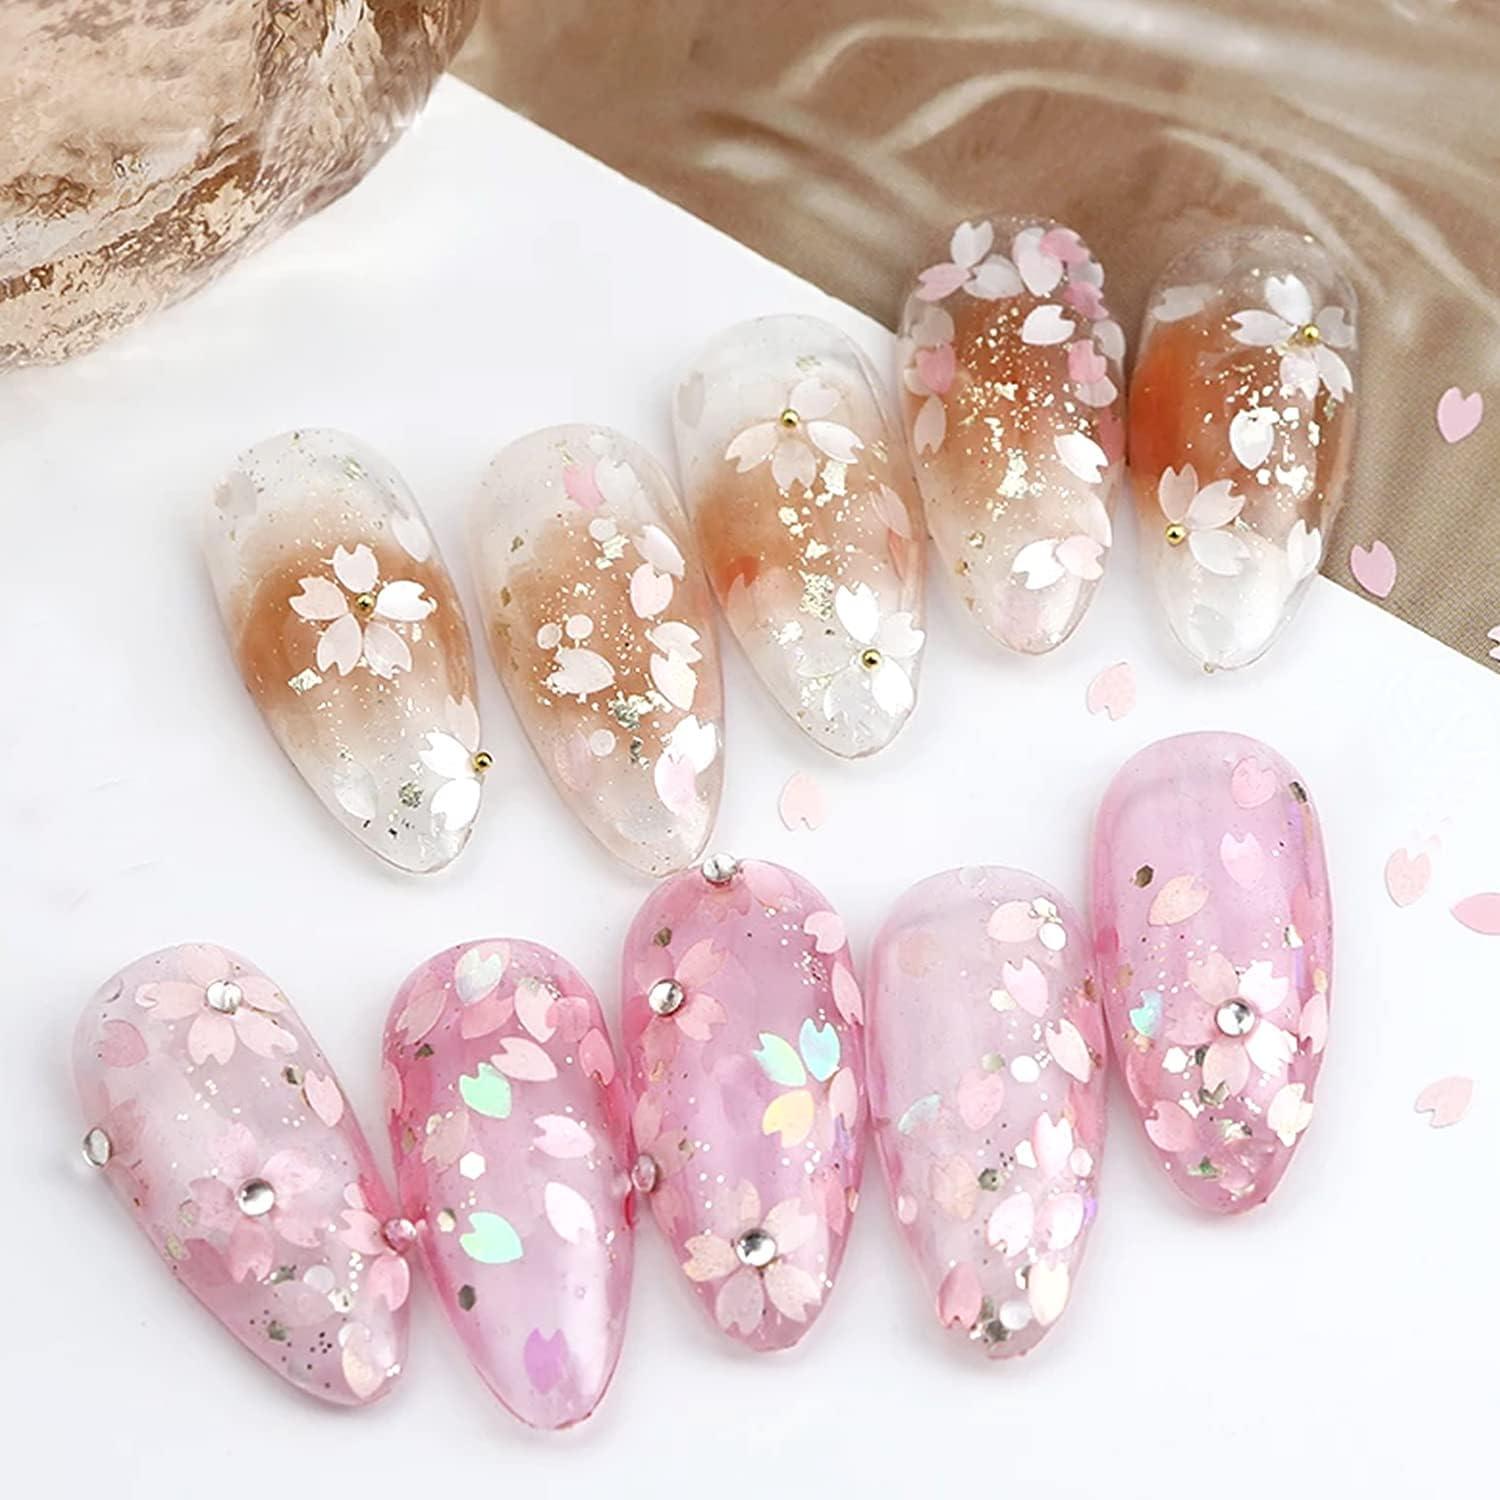 1,440 Me gusta, 10 comentarios - Nails by May (@nailsby_may) en Instagram |  Floral nails, Flower nails, Flower nail art